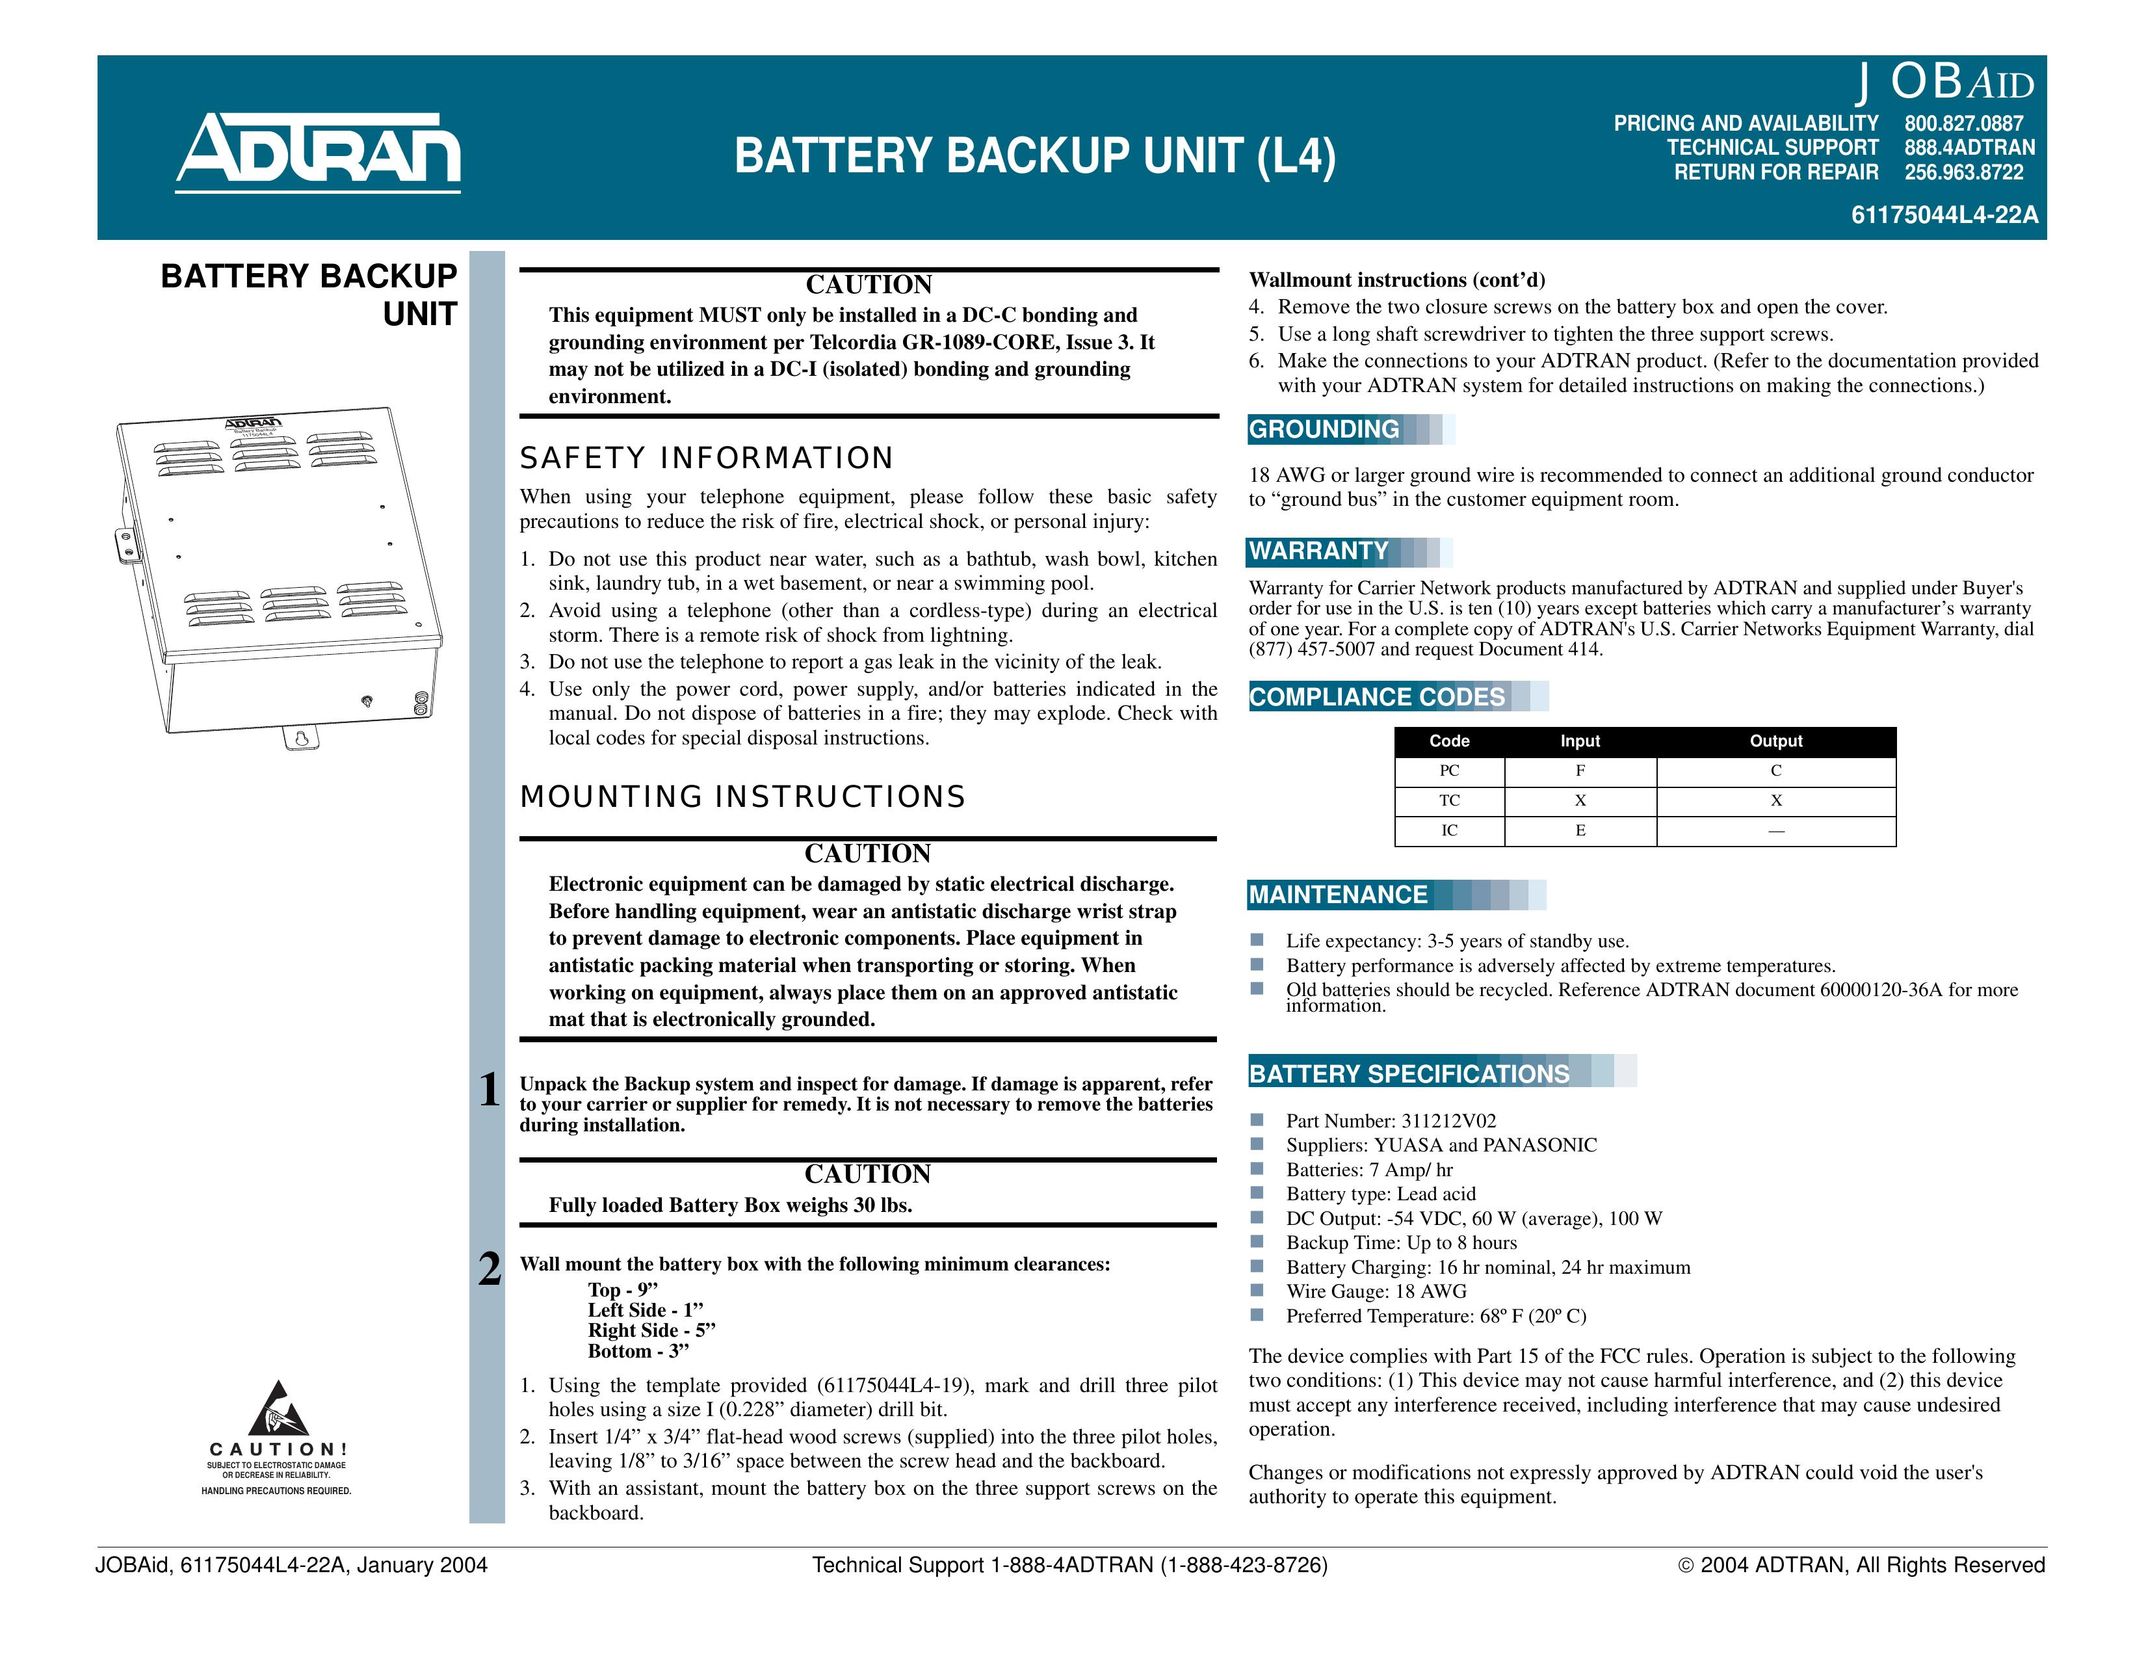 ADTRAN Battery Backup Unit (L4) Battery Charger User Manual